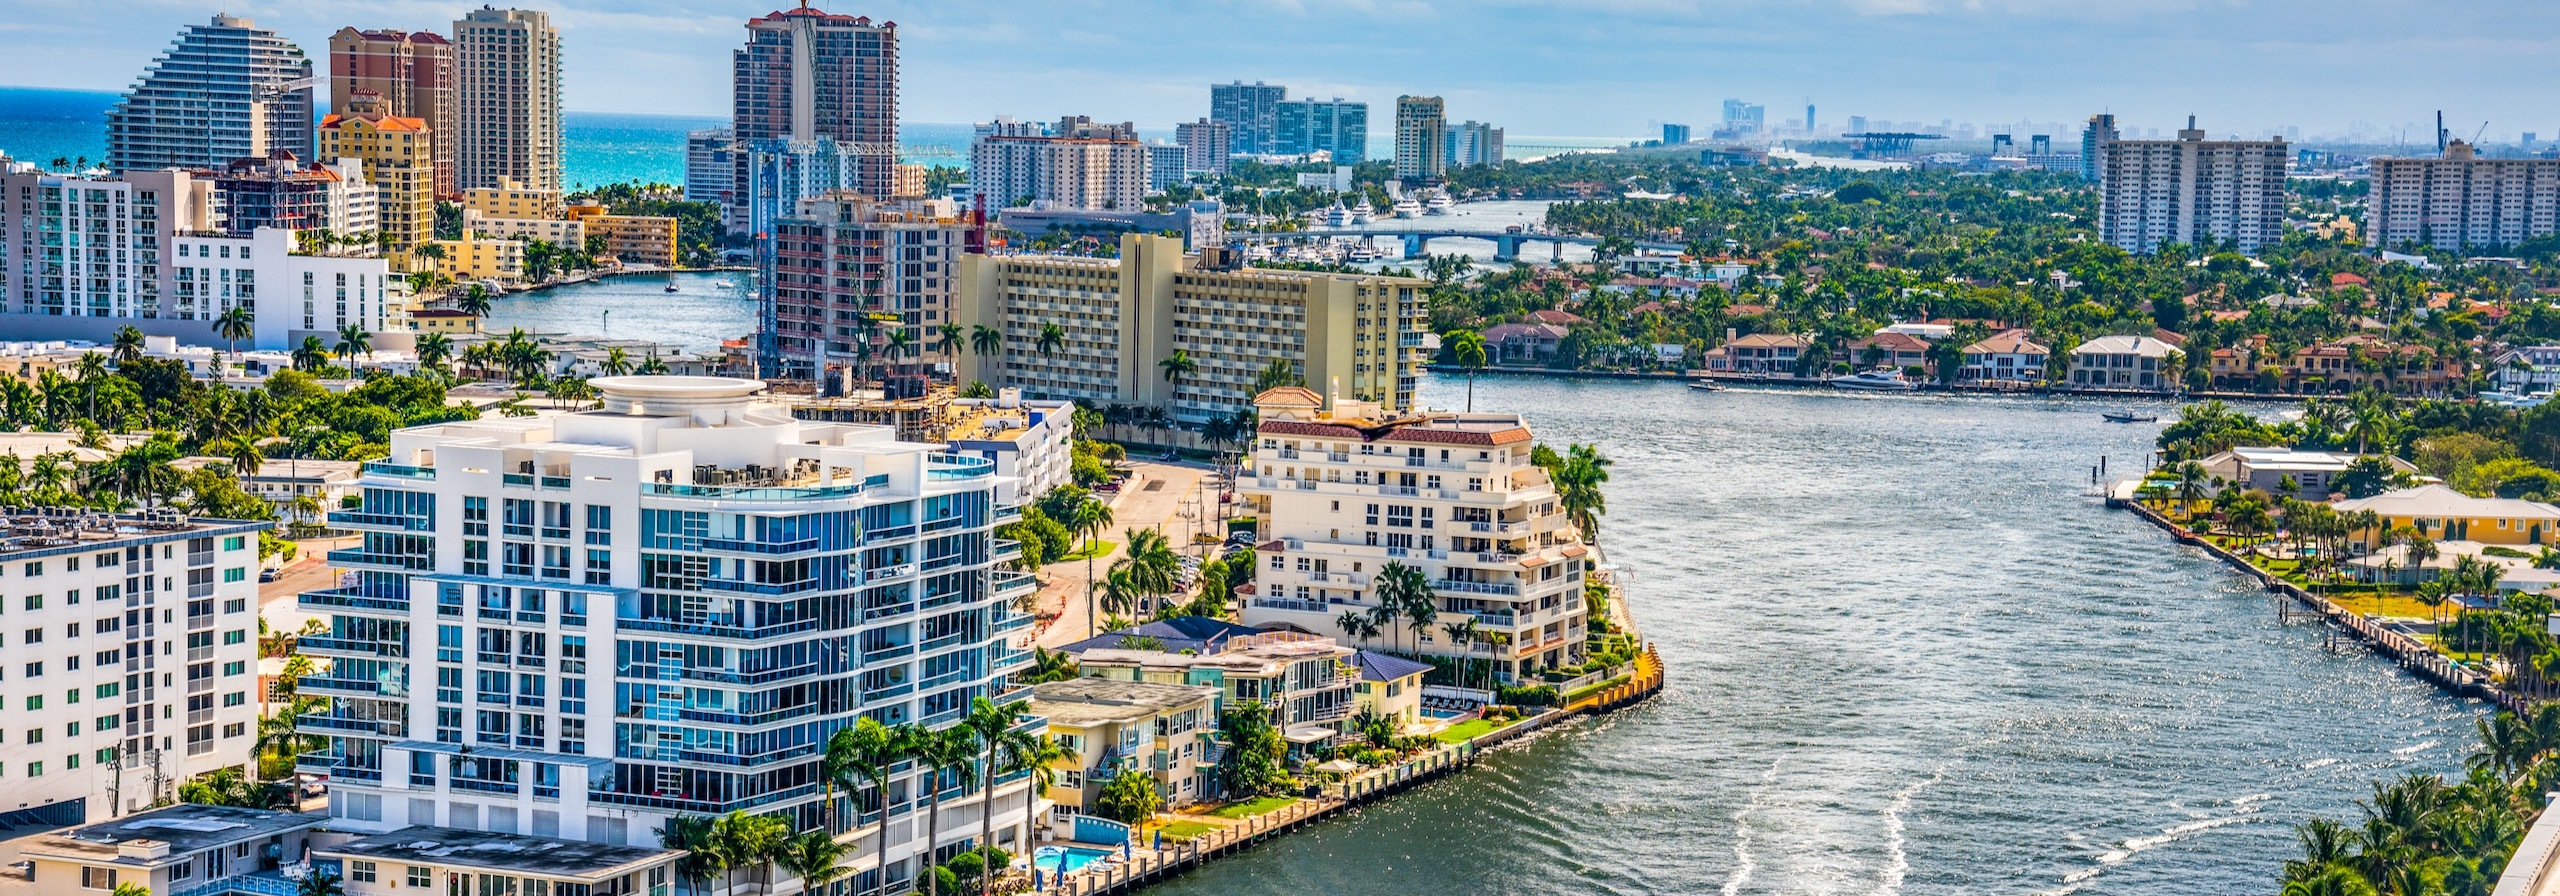 Fort Lauderdale Condos For Sale | Ft Lauderdale Luxury Condos